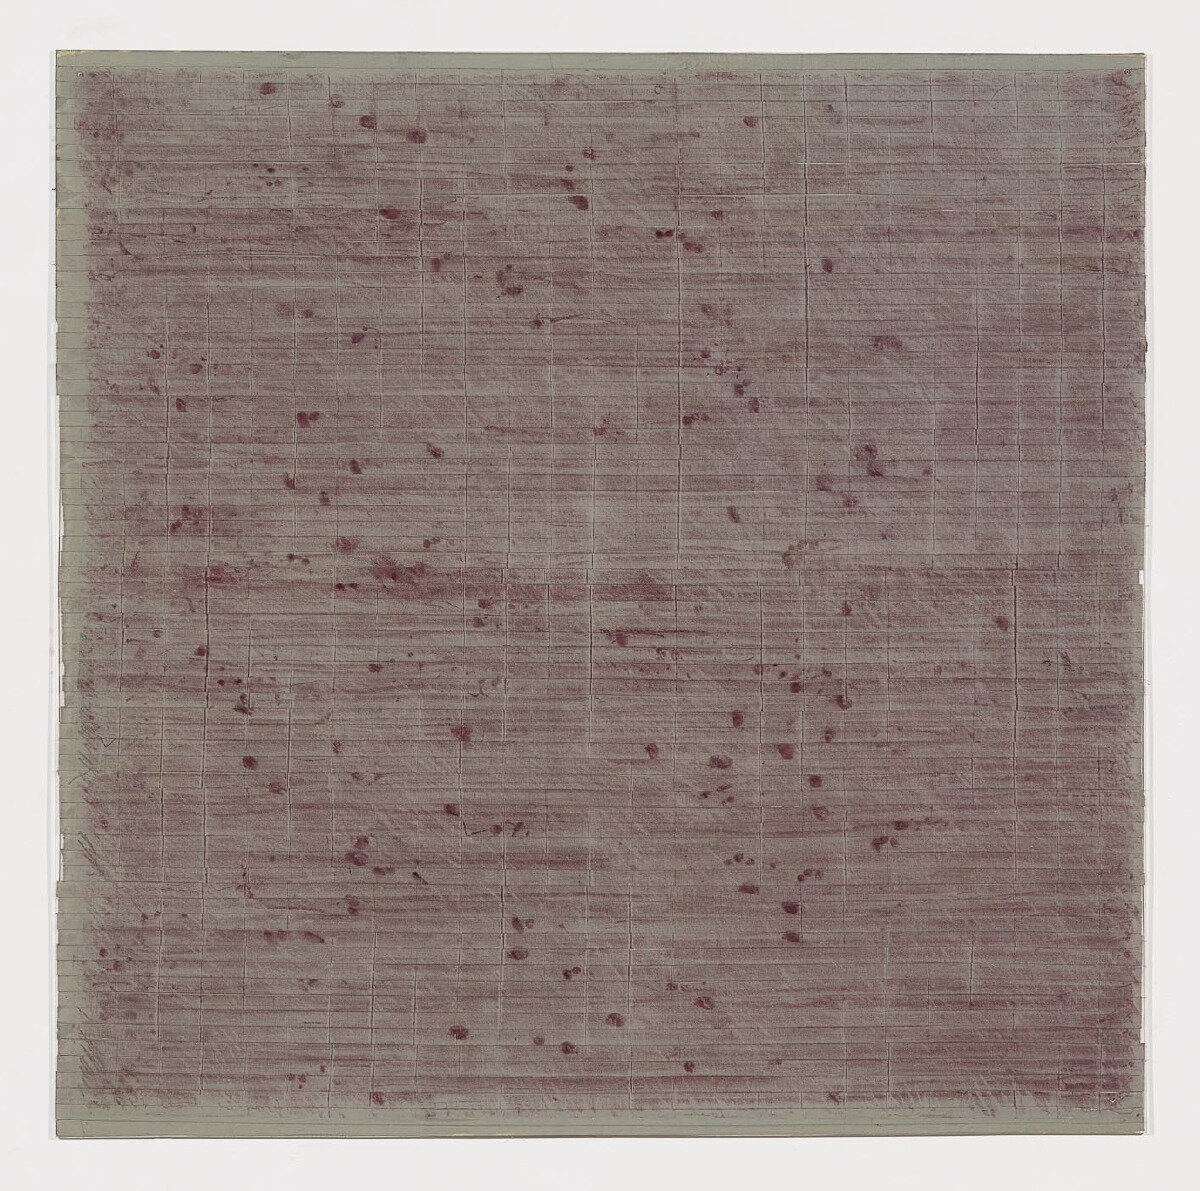  Roseprint, 1978, 50.5 x 50.25 inches, pastel and cloth tape on Plexiglass 